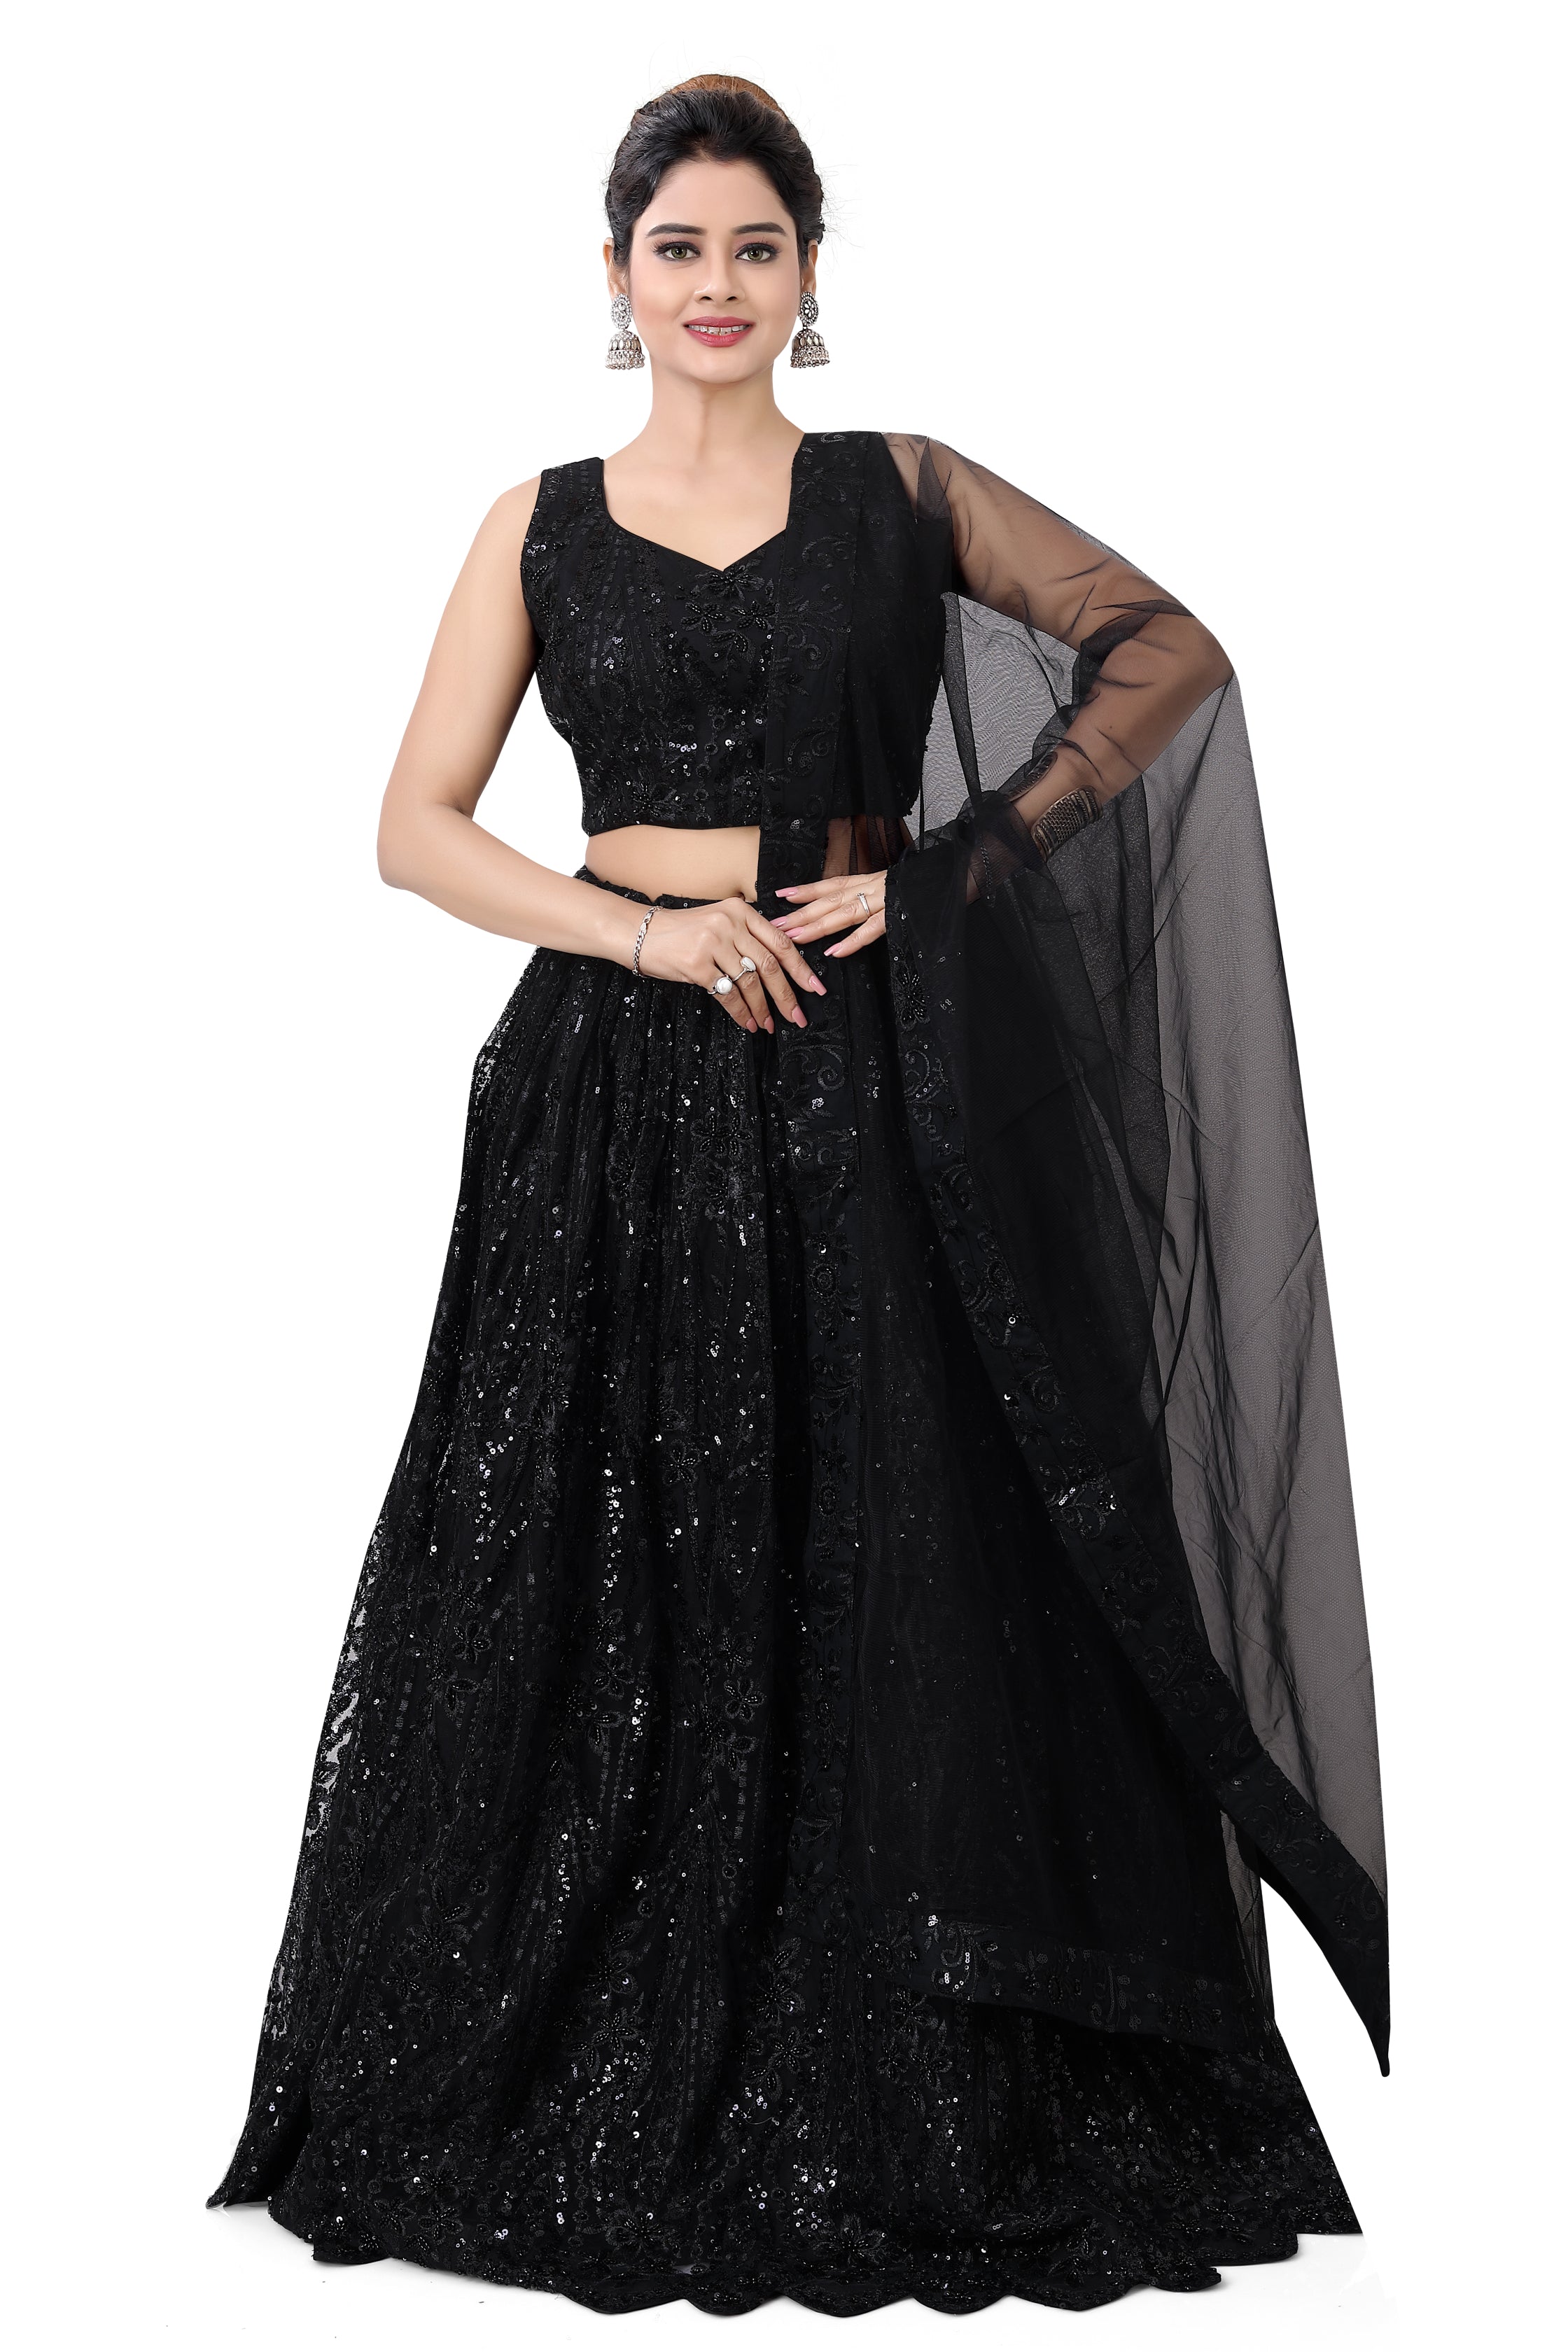 Black Net Lehenga Choli - Premium Partywear Lehenga from Dulhan Exclusives - Just $250! Shop now at Dulhan Exclusives